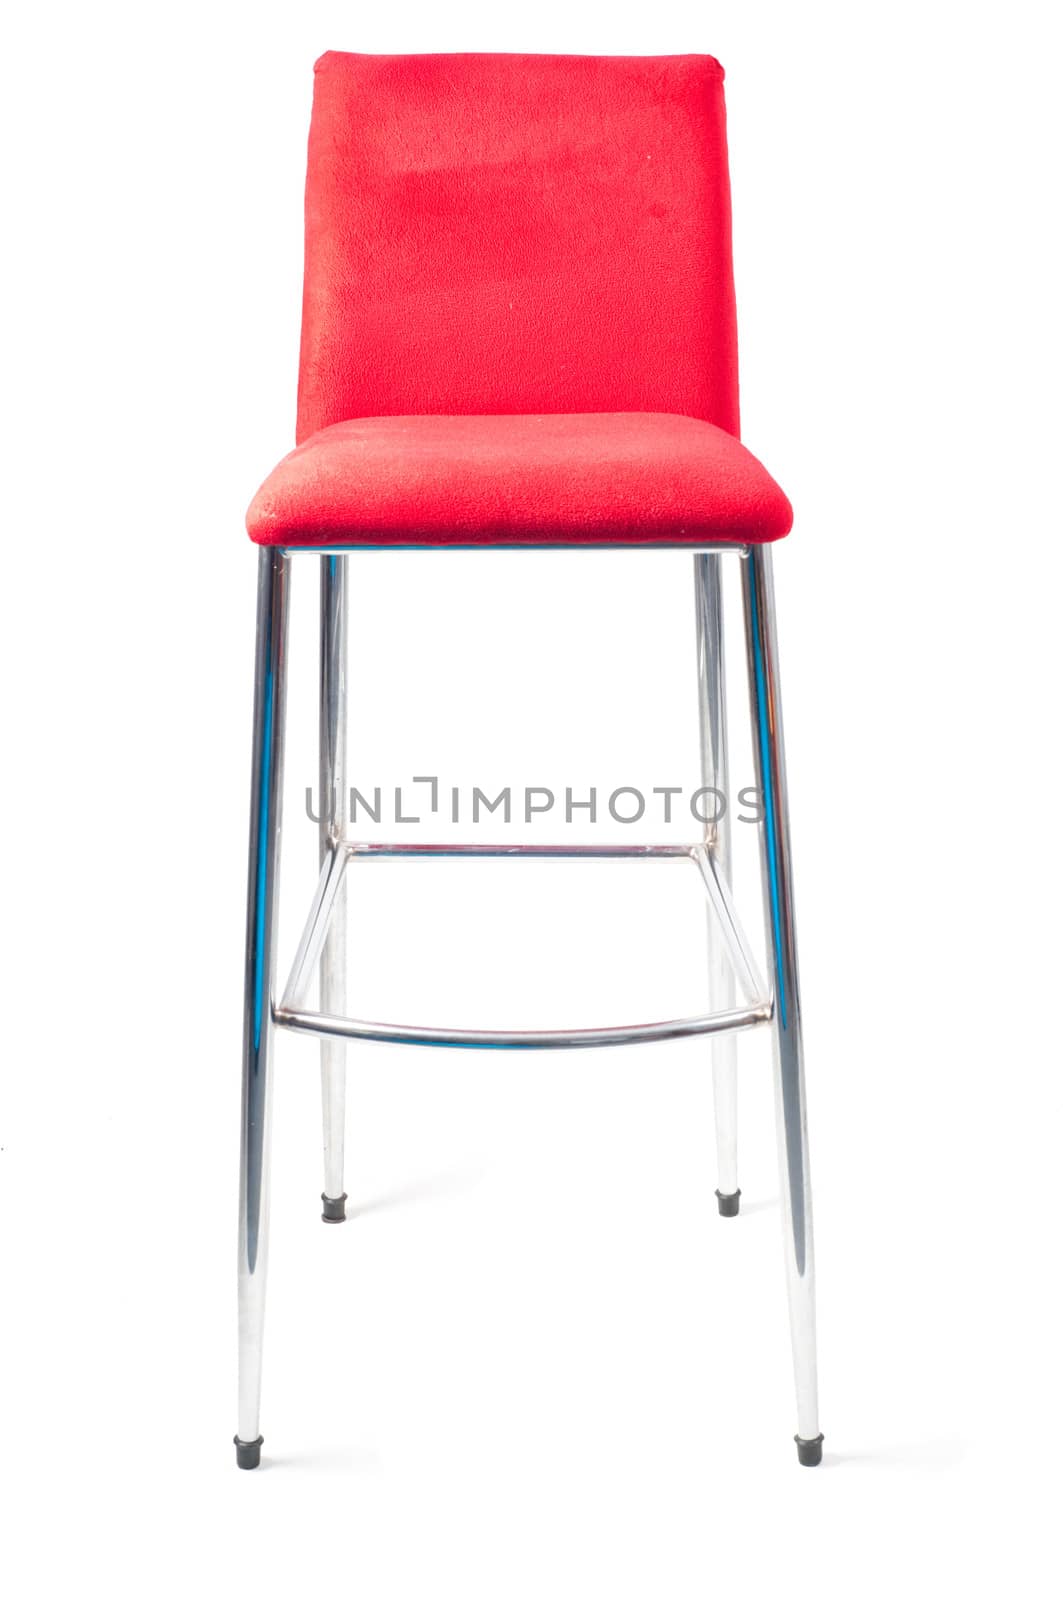 Shot of stylish modern red bar stool